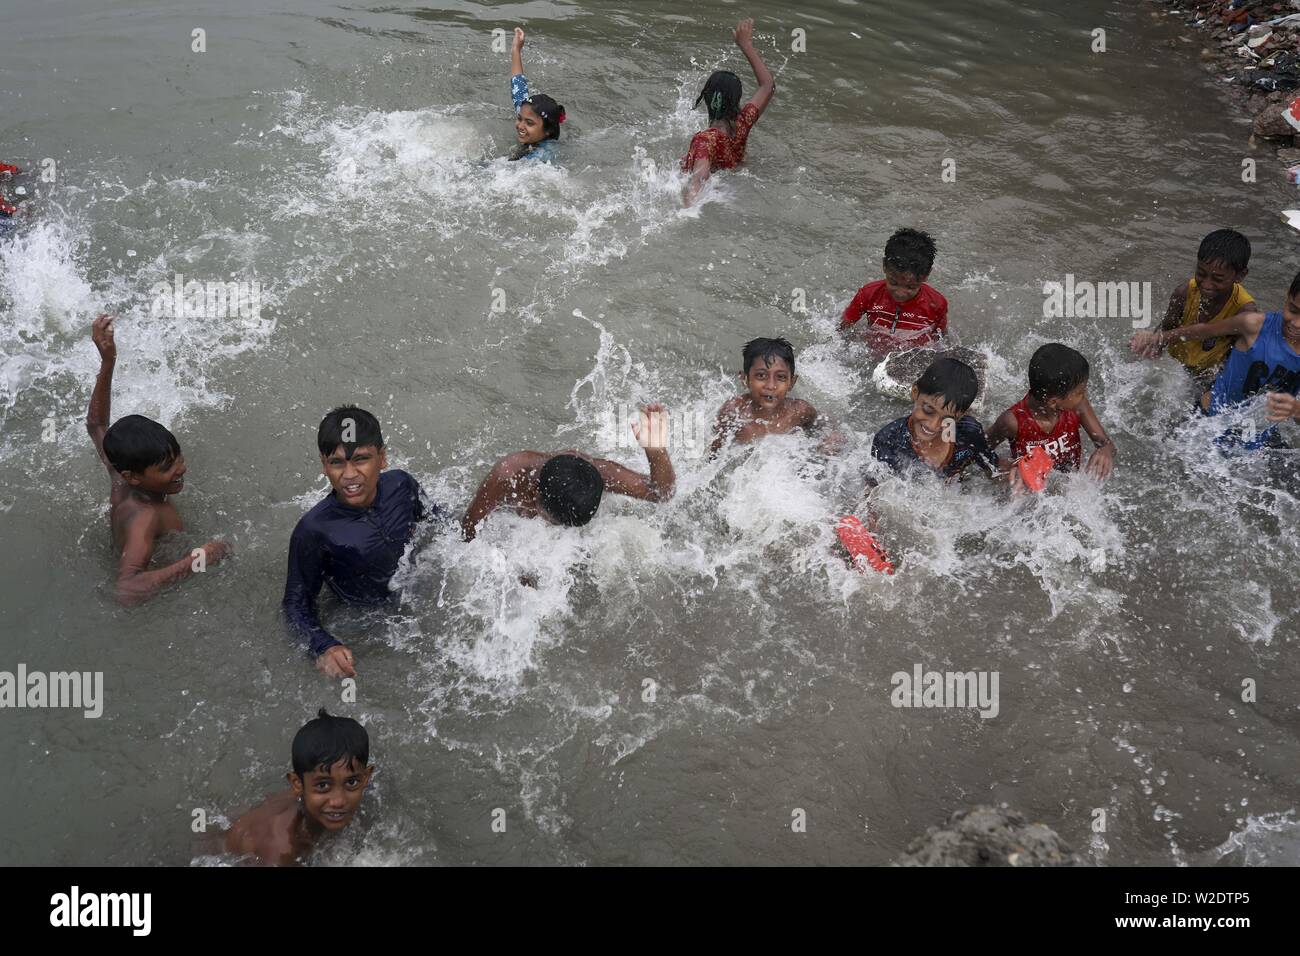 July 8, 2019 - Dhaka, Bangladesh - Children have fun while taking shower at the Buriganga River in Dhaka Bangladesh. (Credit Image: © Kazi Salahuddin via ZUMA Wire) Stock Photo